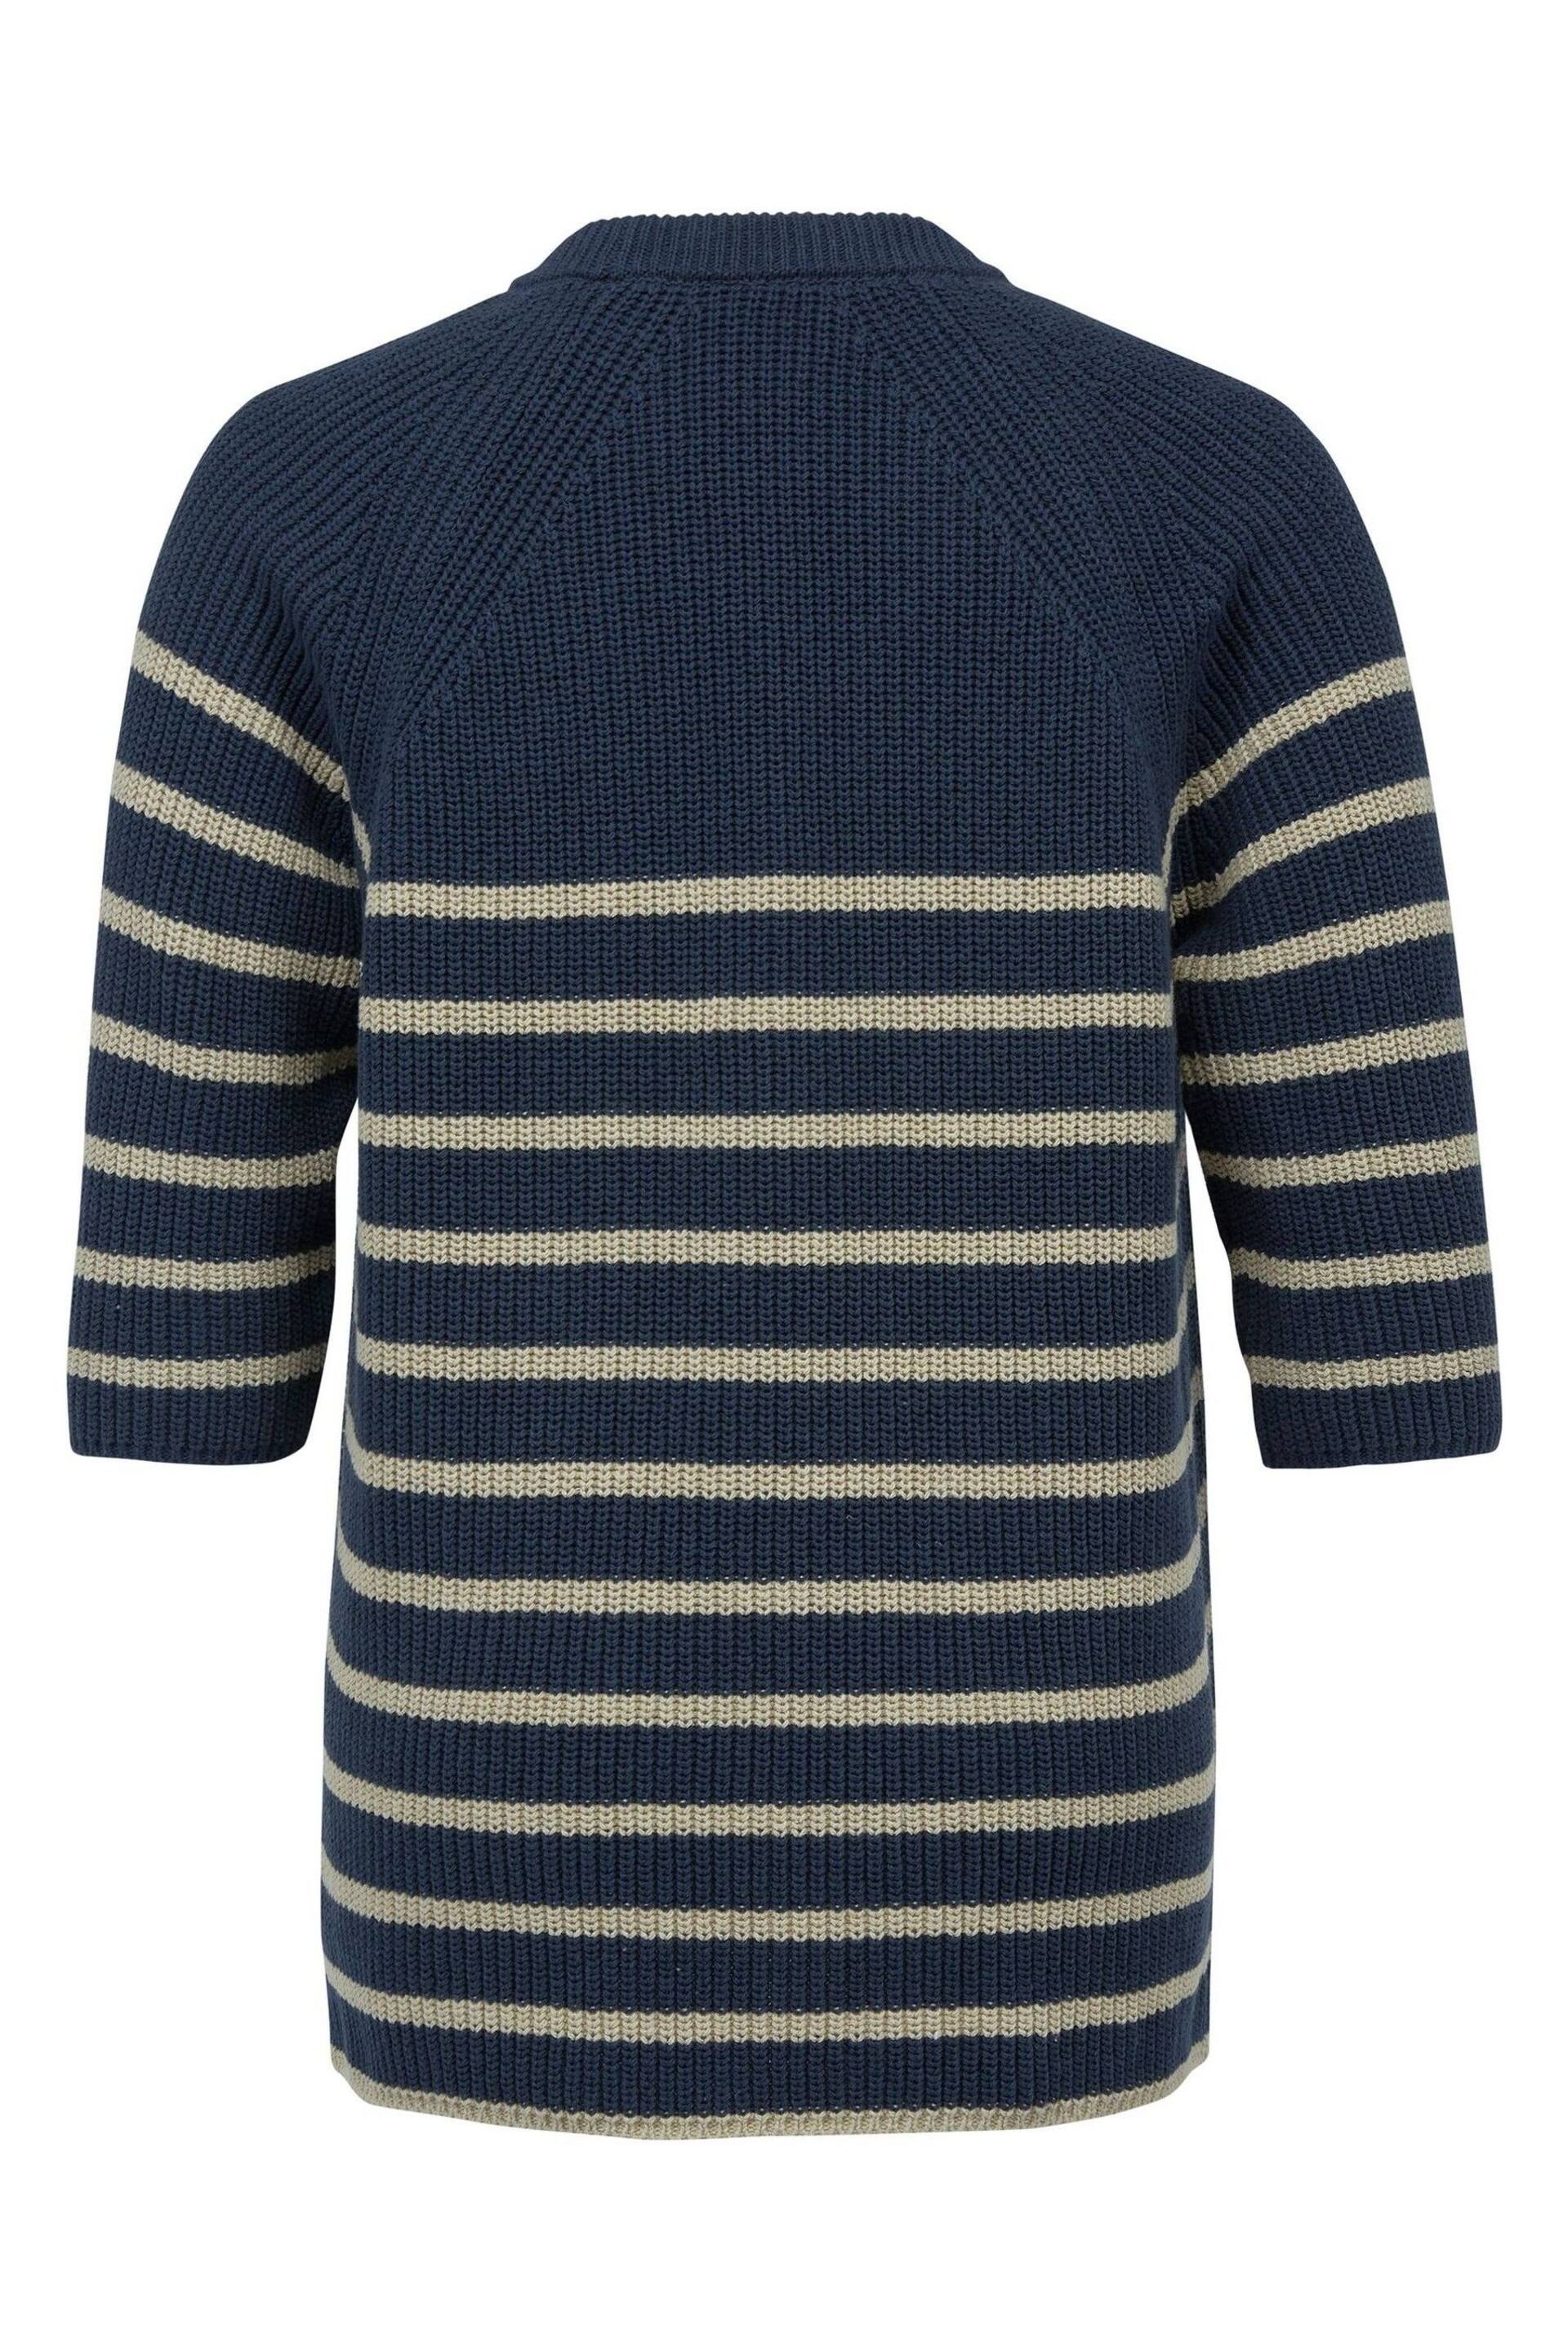 Celtic & Co. Blue Half Sleeve Knitted Jumper - Image 3 of 5